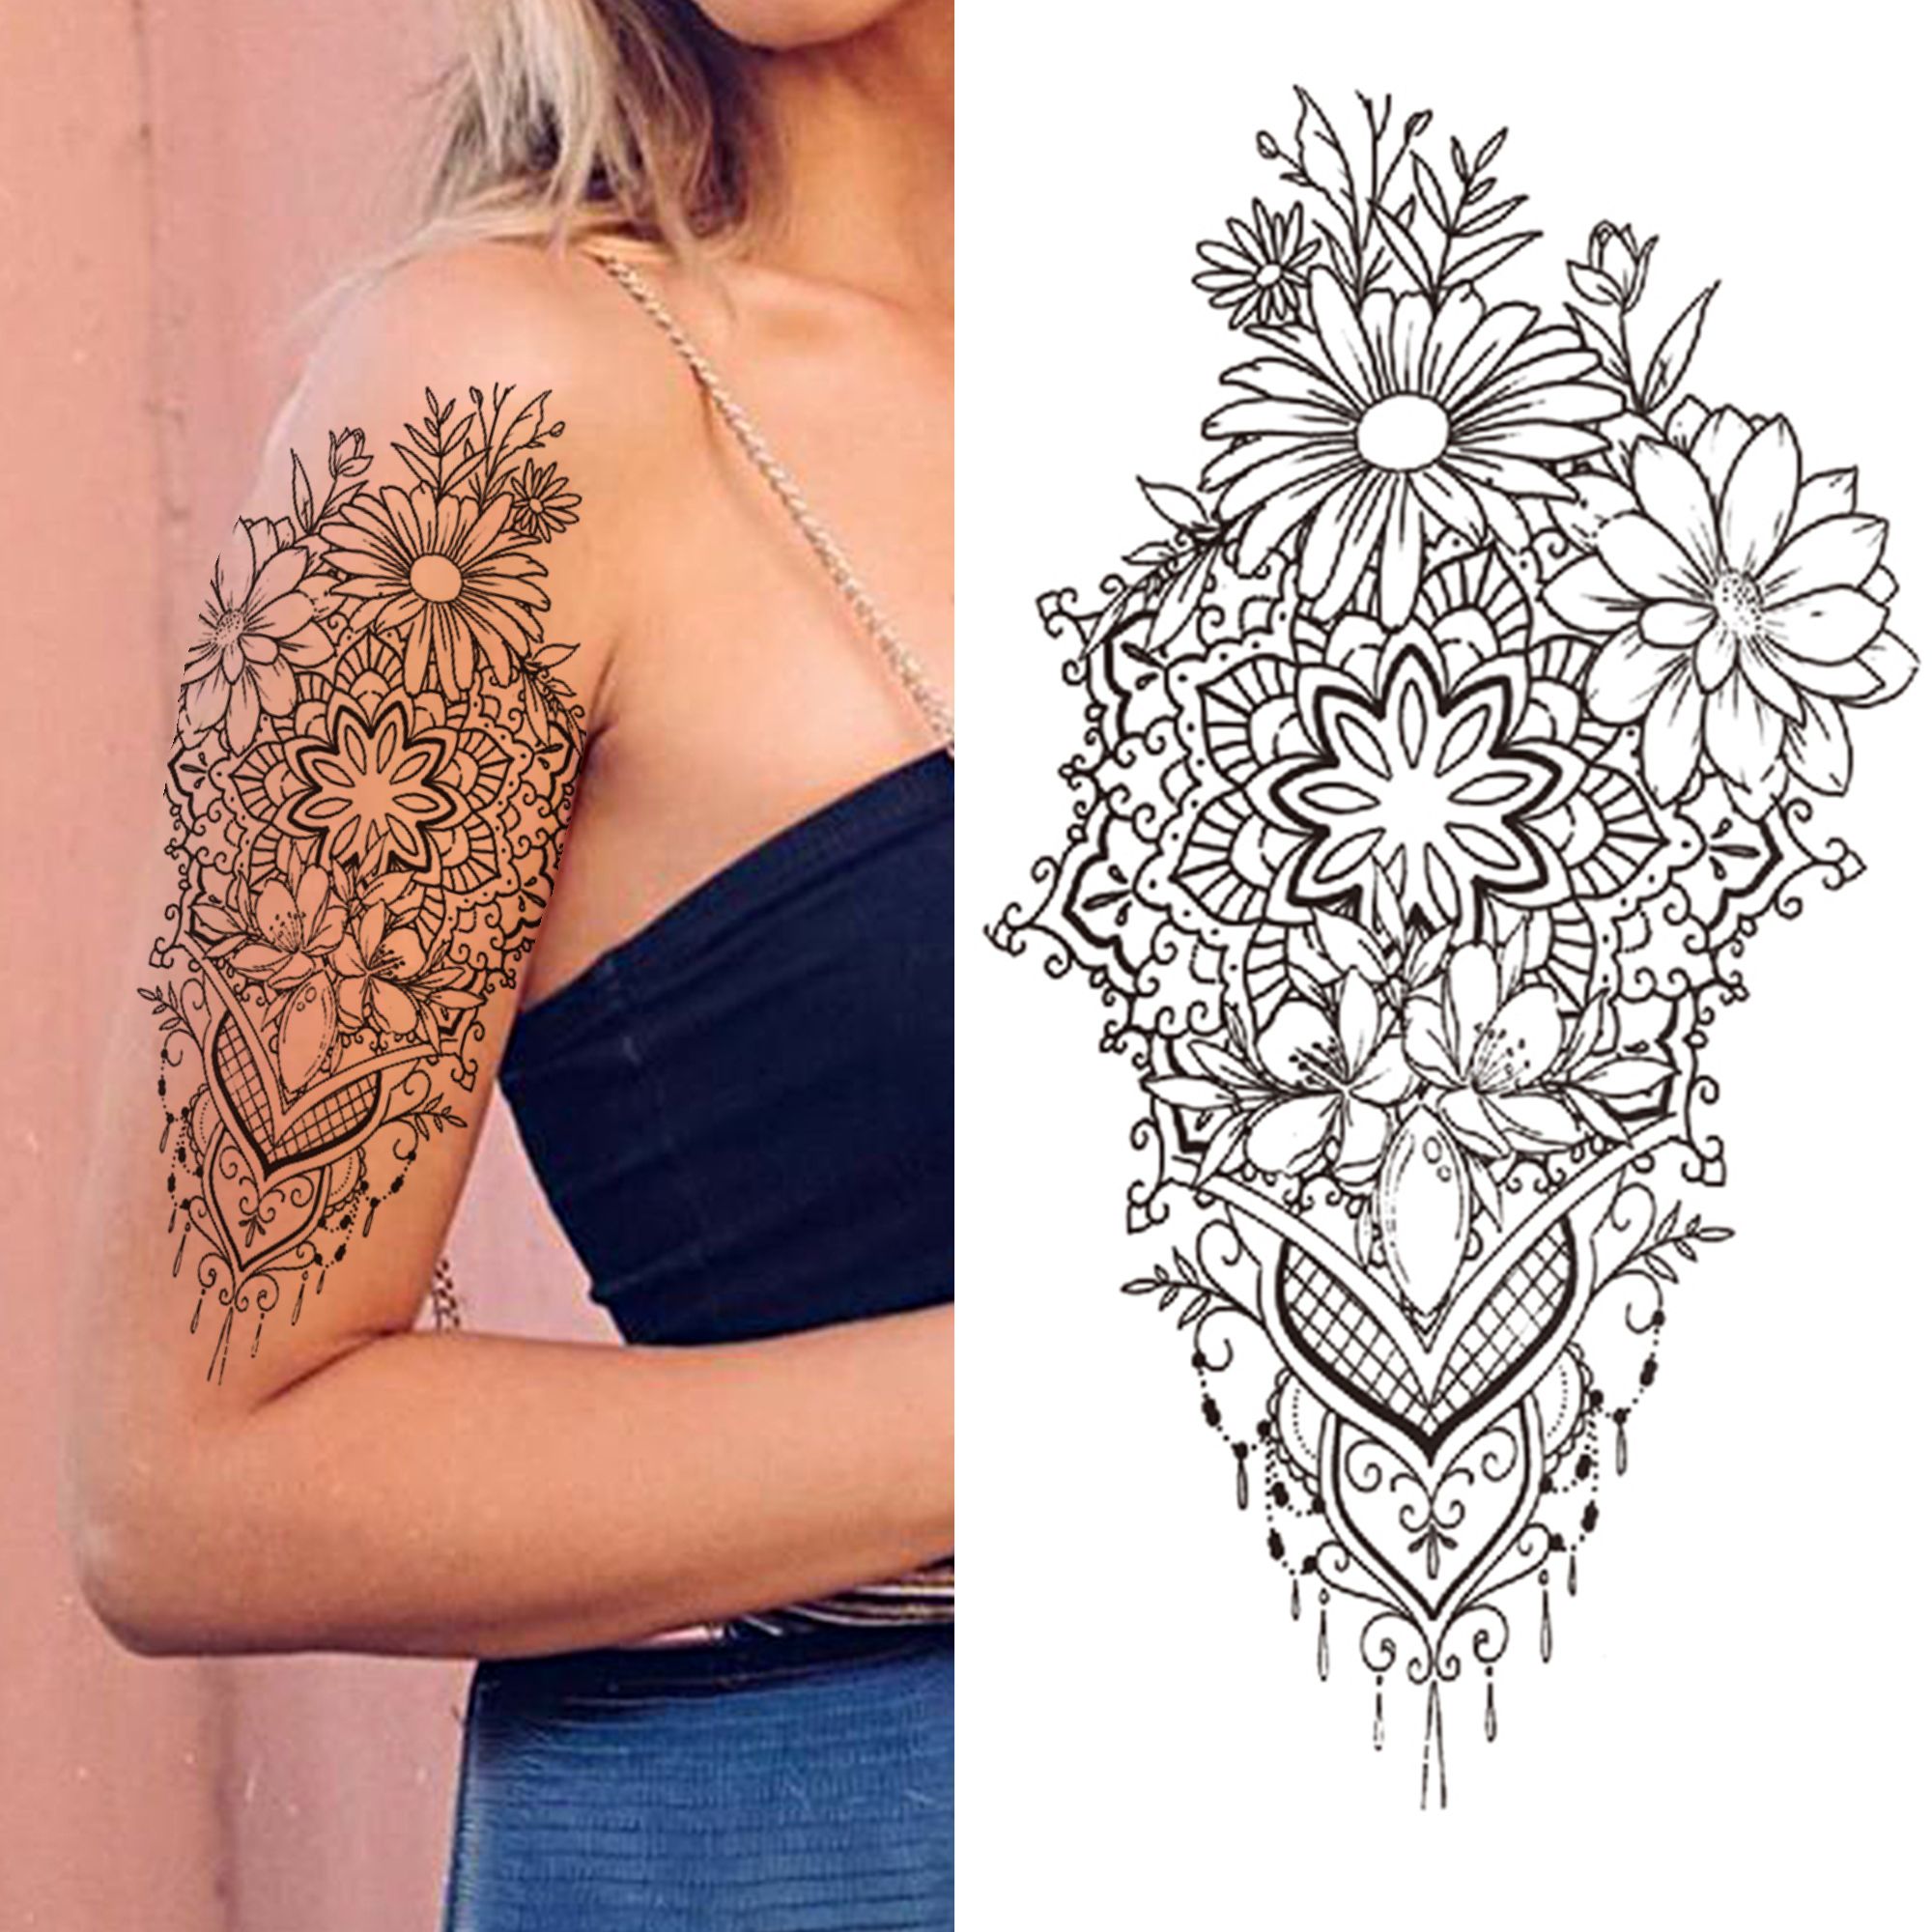 Waterproof Temporary Tattoos Sticker tattoo Stickers For Women Girls arm  Black Peony Fake sleeve Rose Daffodil